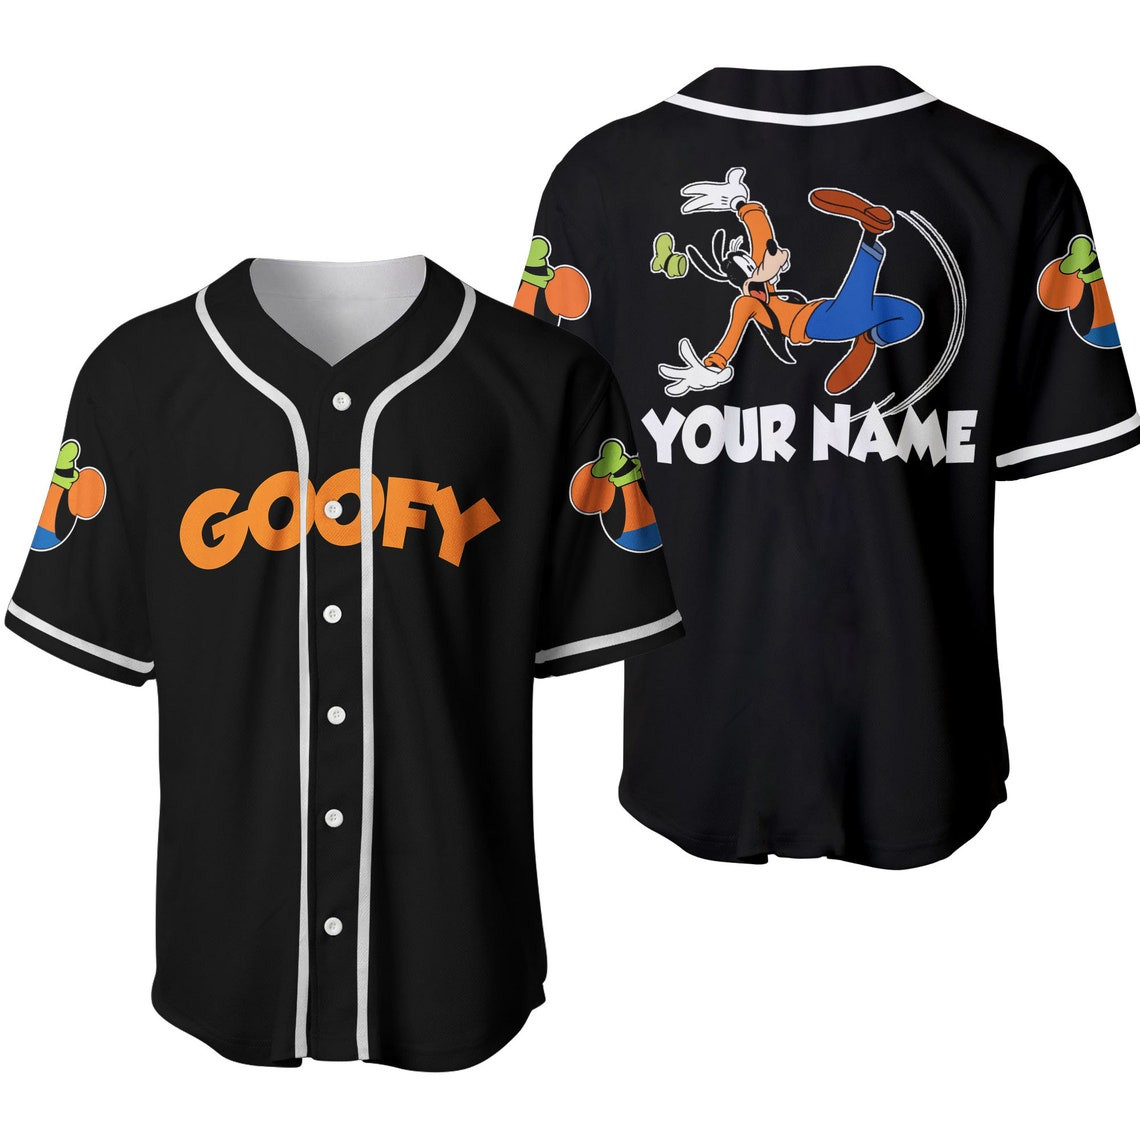 Goofy Dog Black Orange Disney Unisex Cartoon Custom Baseball Jersey Personalized Shirt Men Women